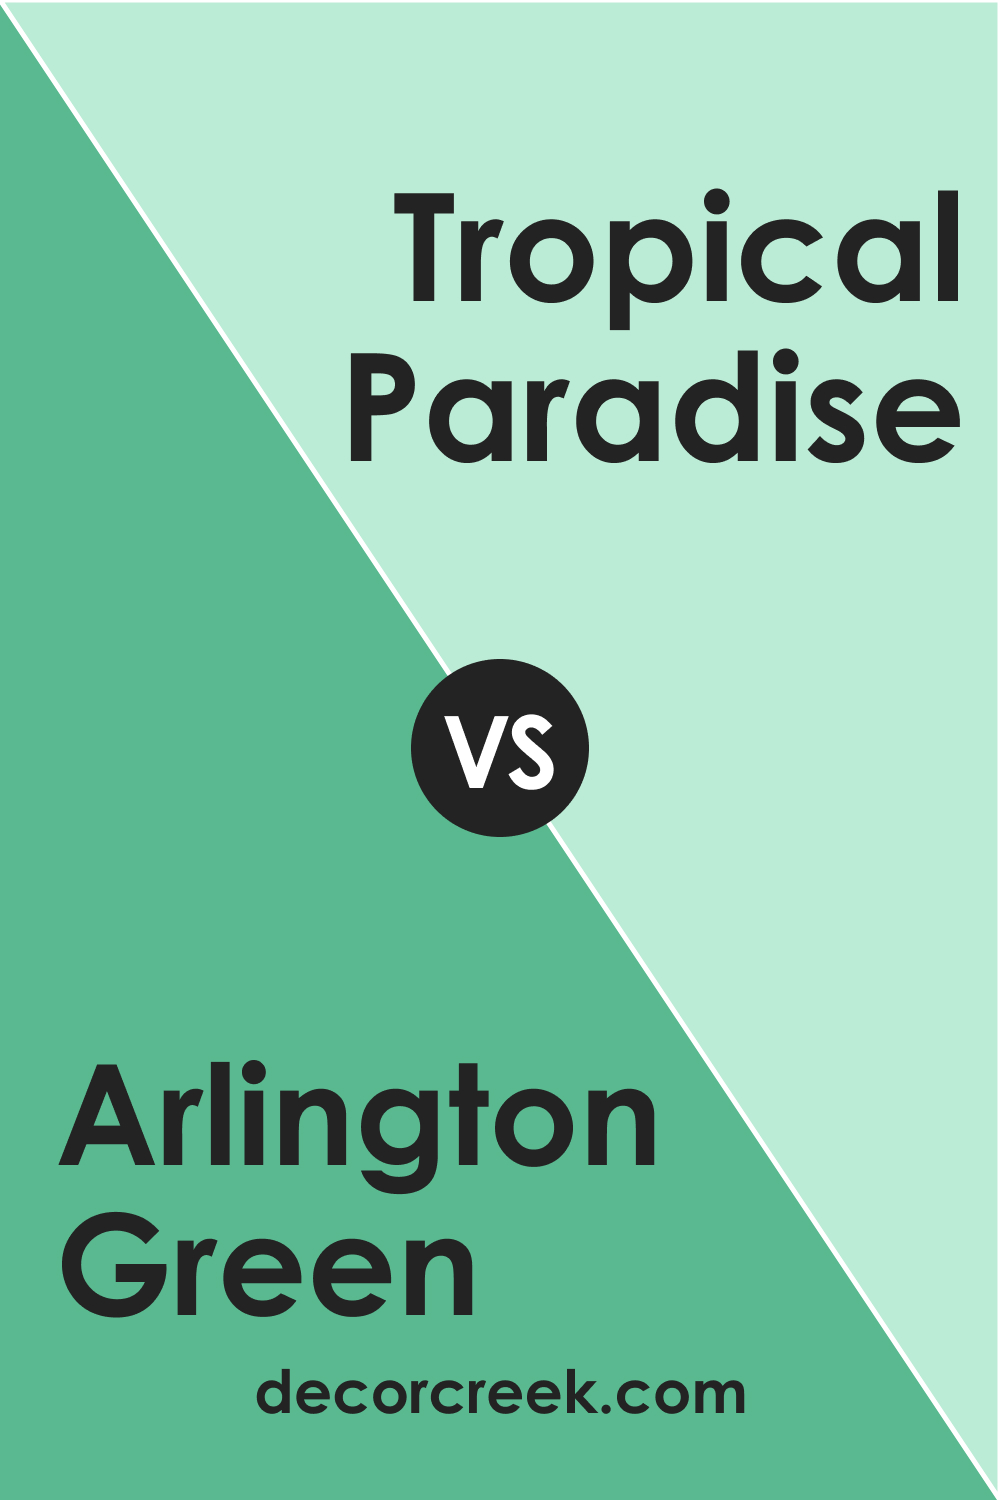 Arlington Green 580 vs. BM 575 Tropical Paradise